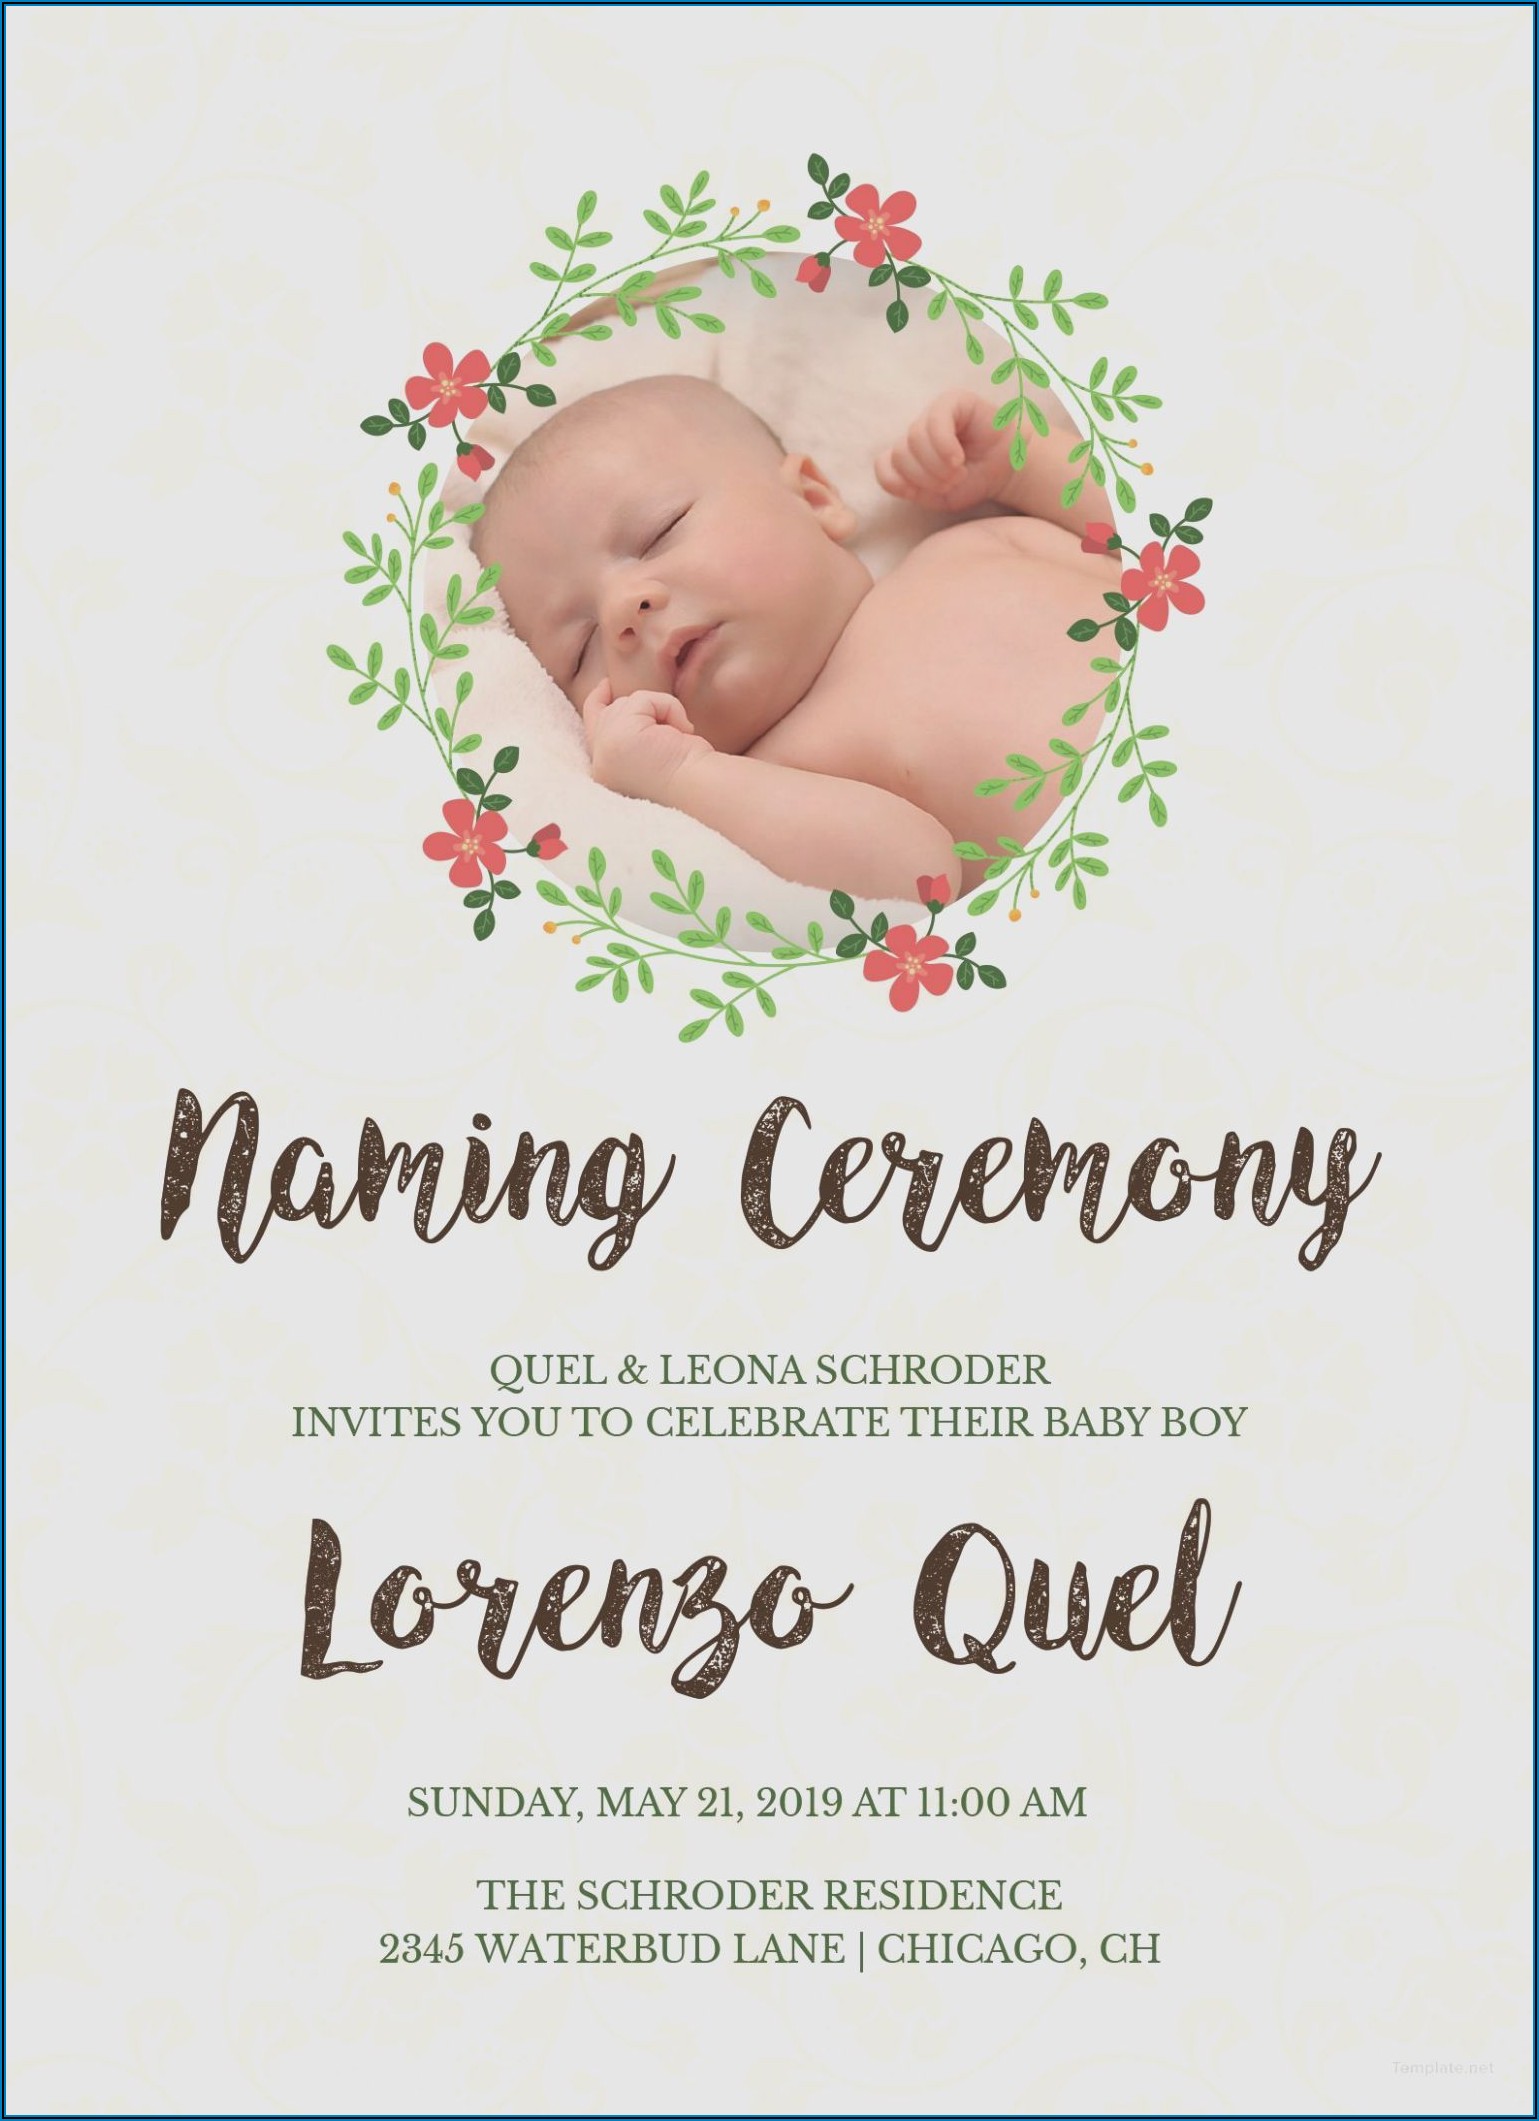 Naming Ceremony Invitation Card For Baby Girl Editable